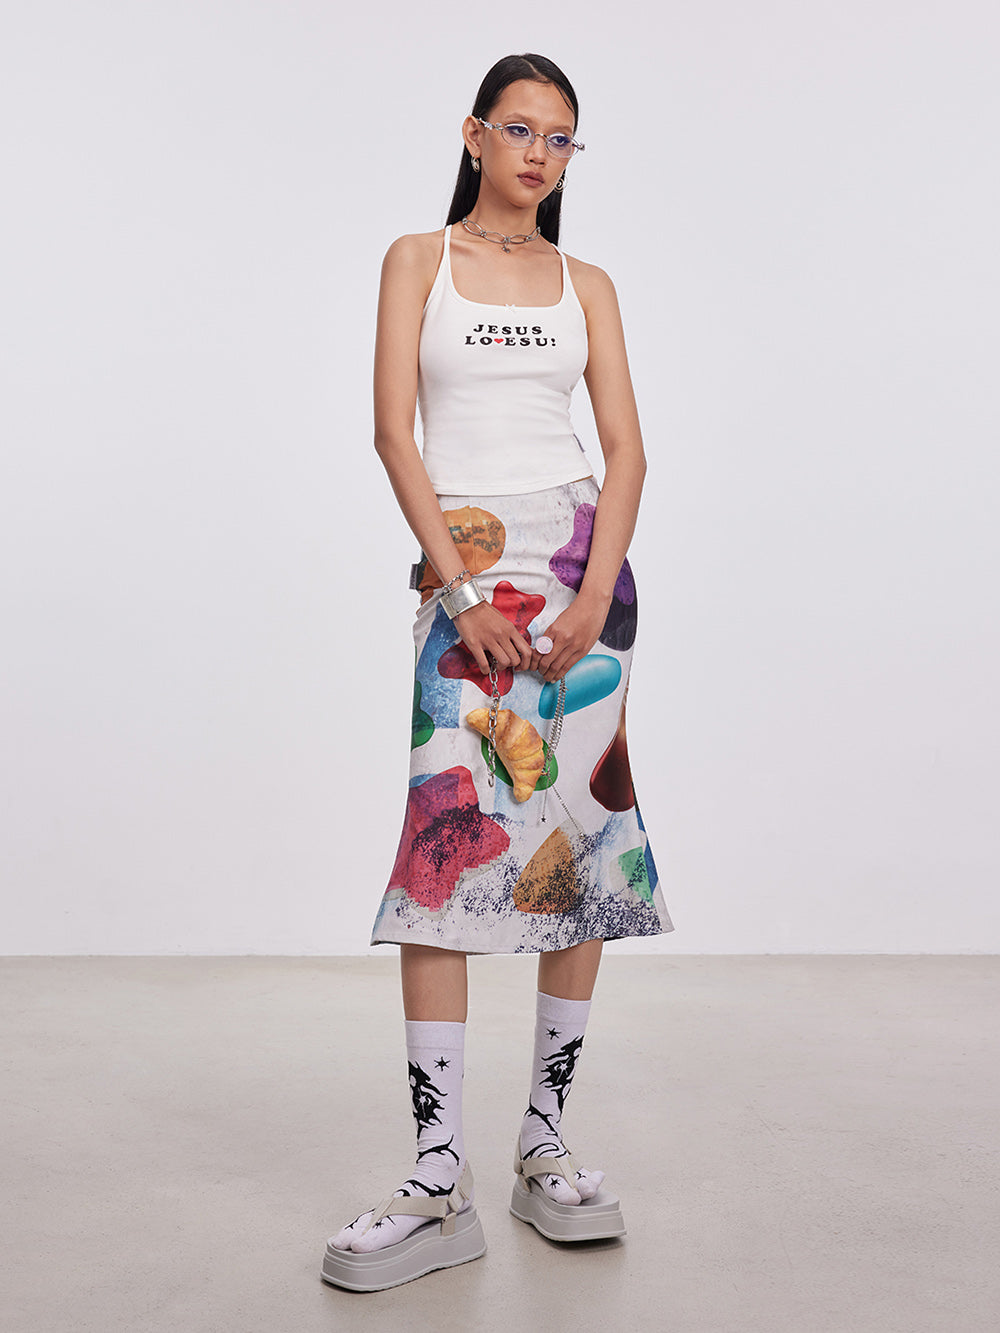 MUKTANK x Damage Asia Bear-shaped Gummy Candy Print Mermaid Skirt